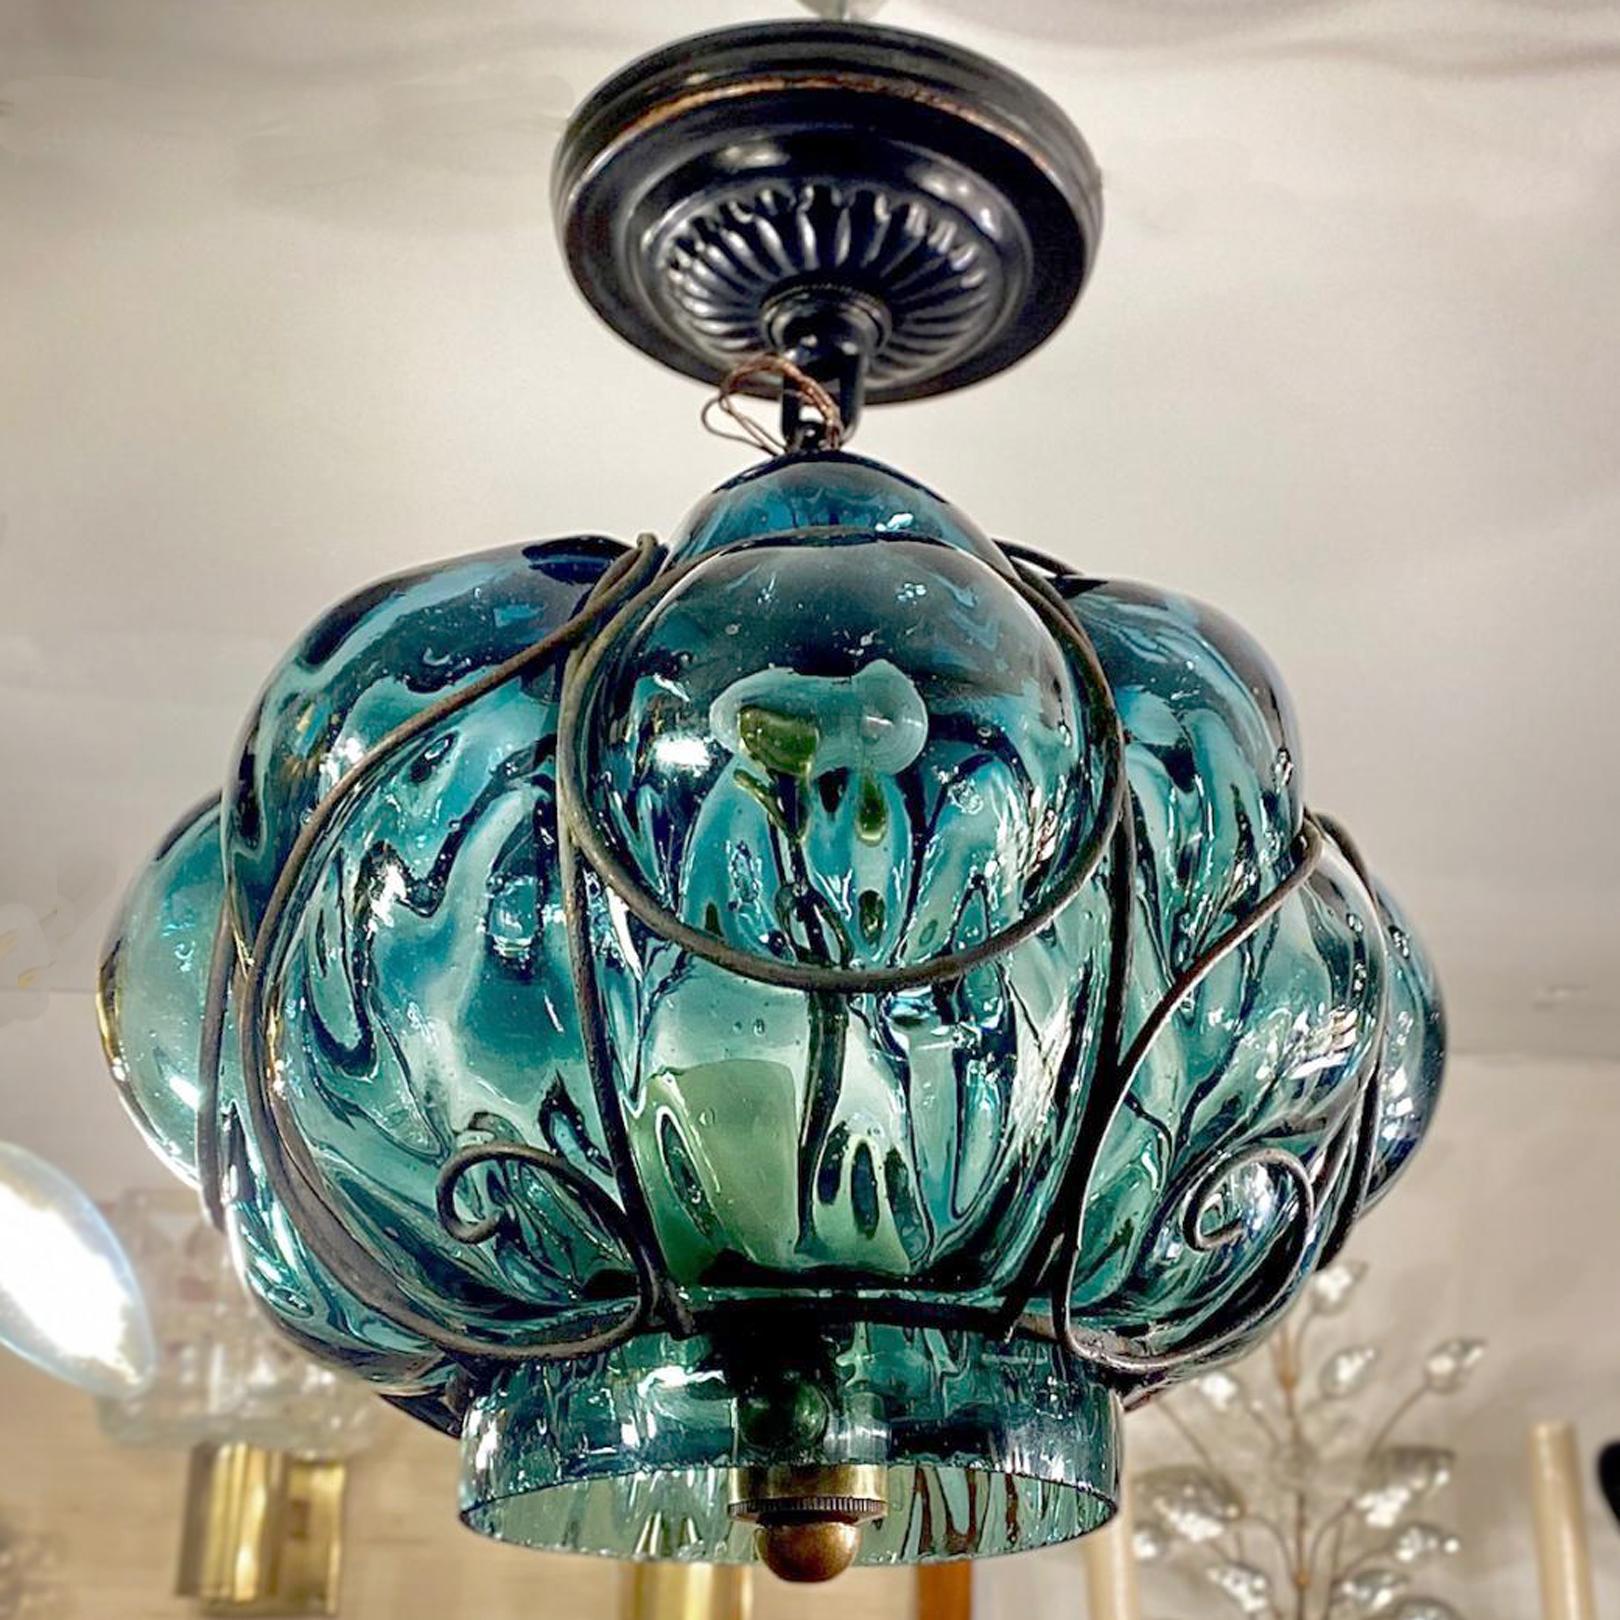 A circa 1950's Italian blown glass lantern with iron work with 2 candelabra lights.

Measurements:
Diameter: 10”
Drop: 12”